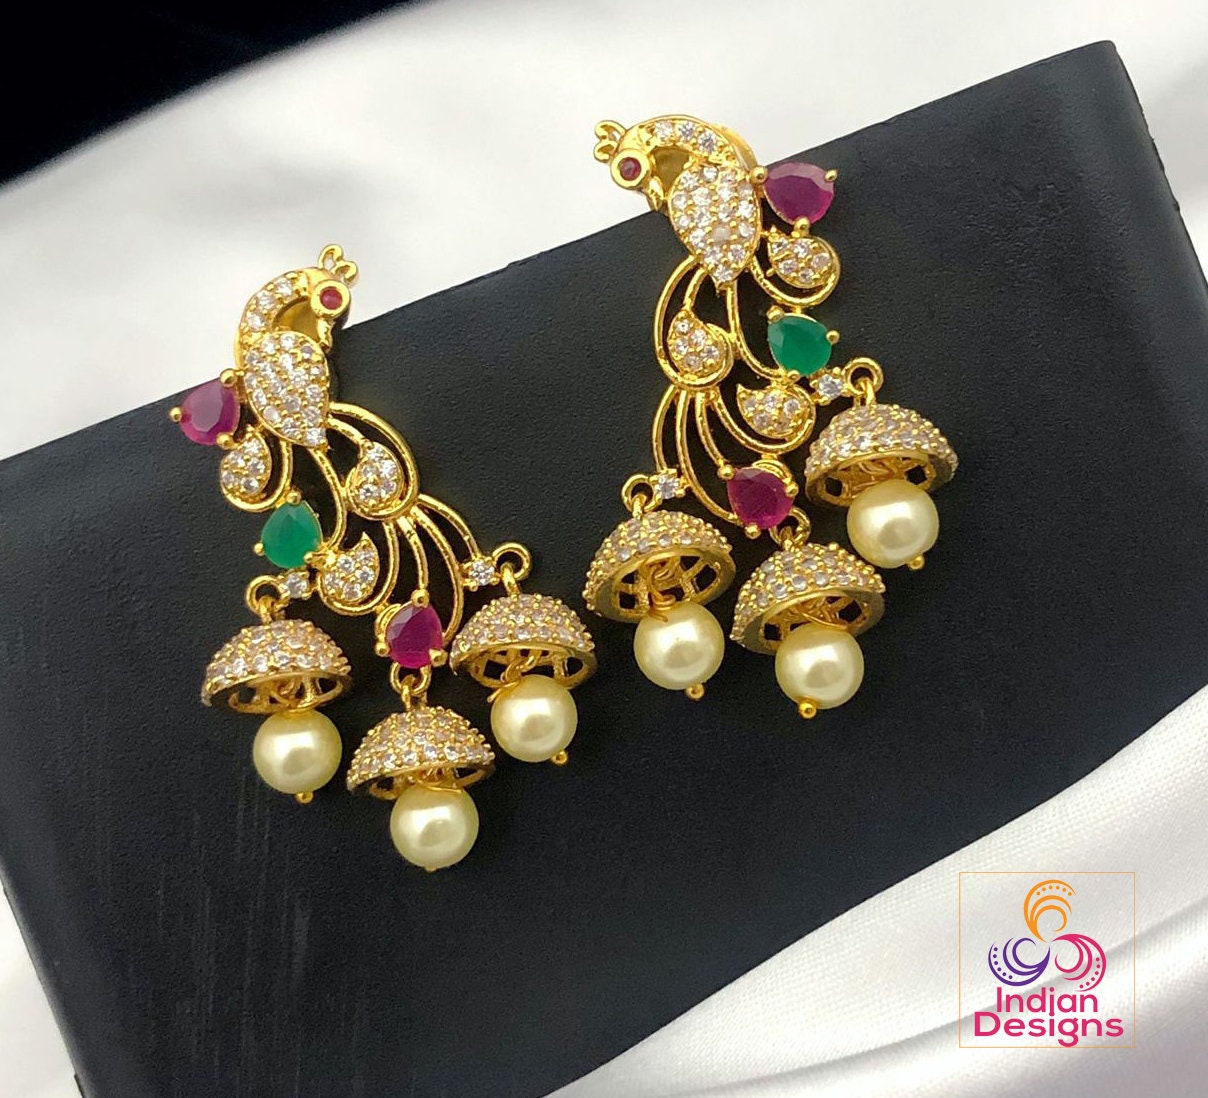 22K Gold Filigree Jhumka Earrings (7.75G) - Queen of Hearts Jewelry